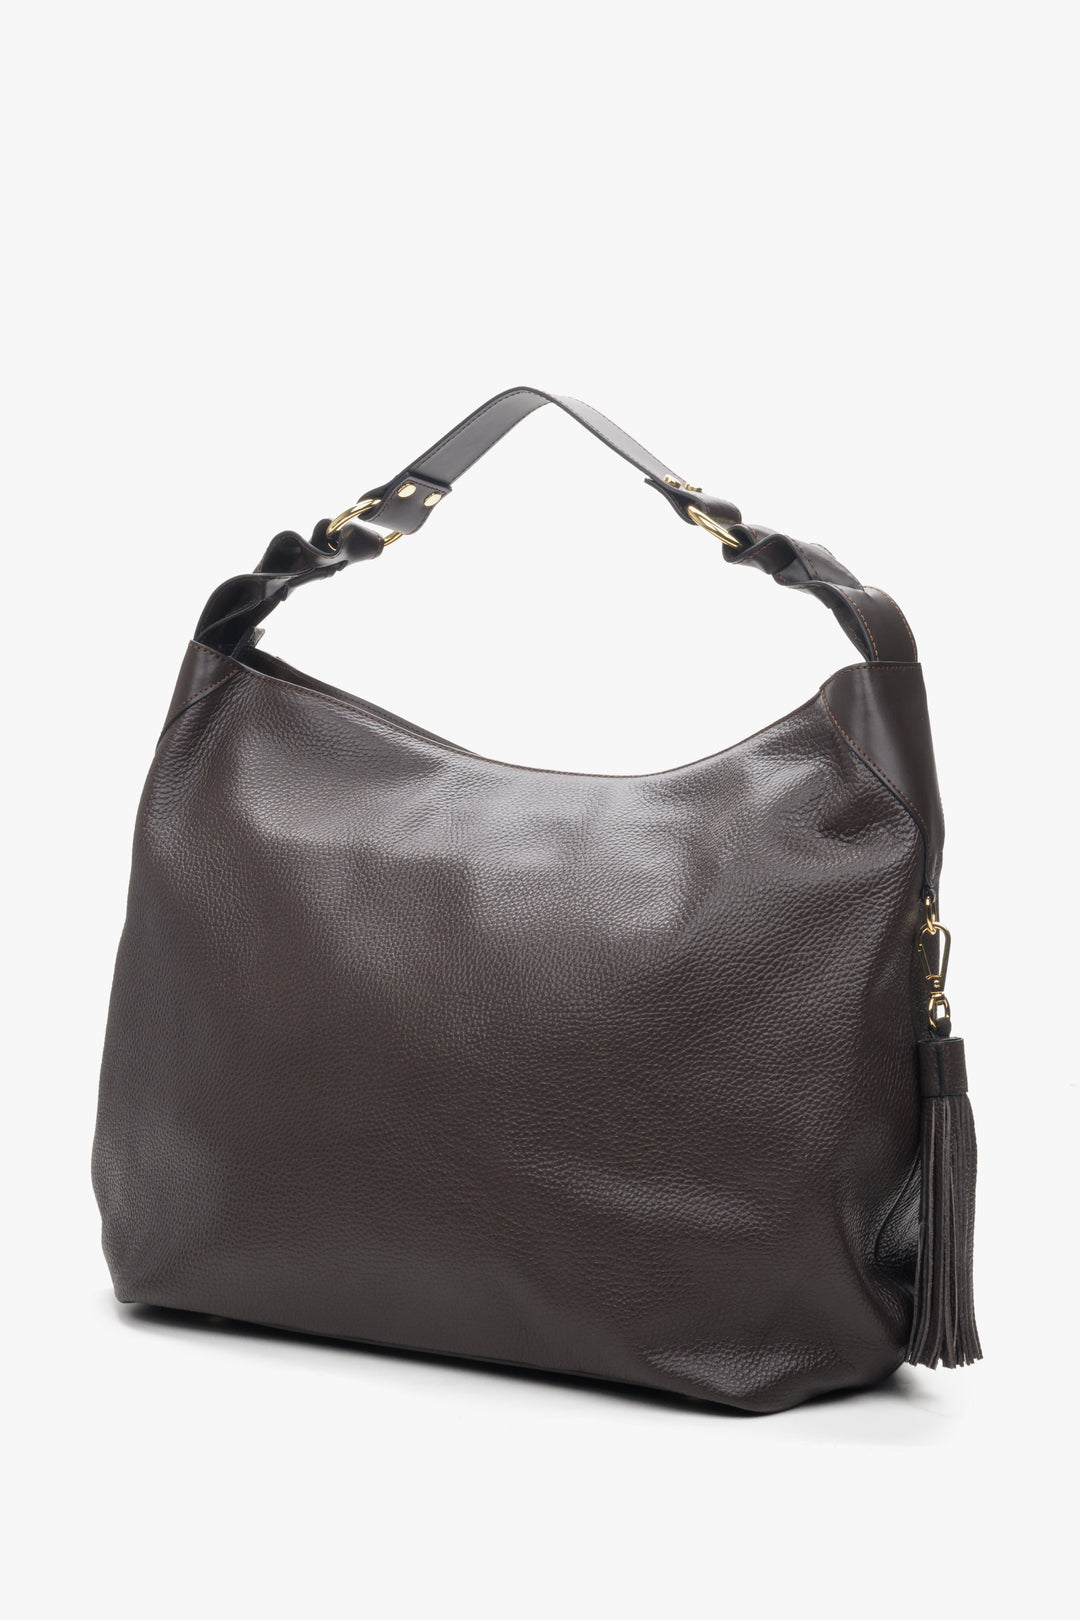 Women's dark brown leather hobo bag by Estro.